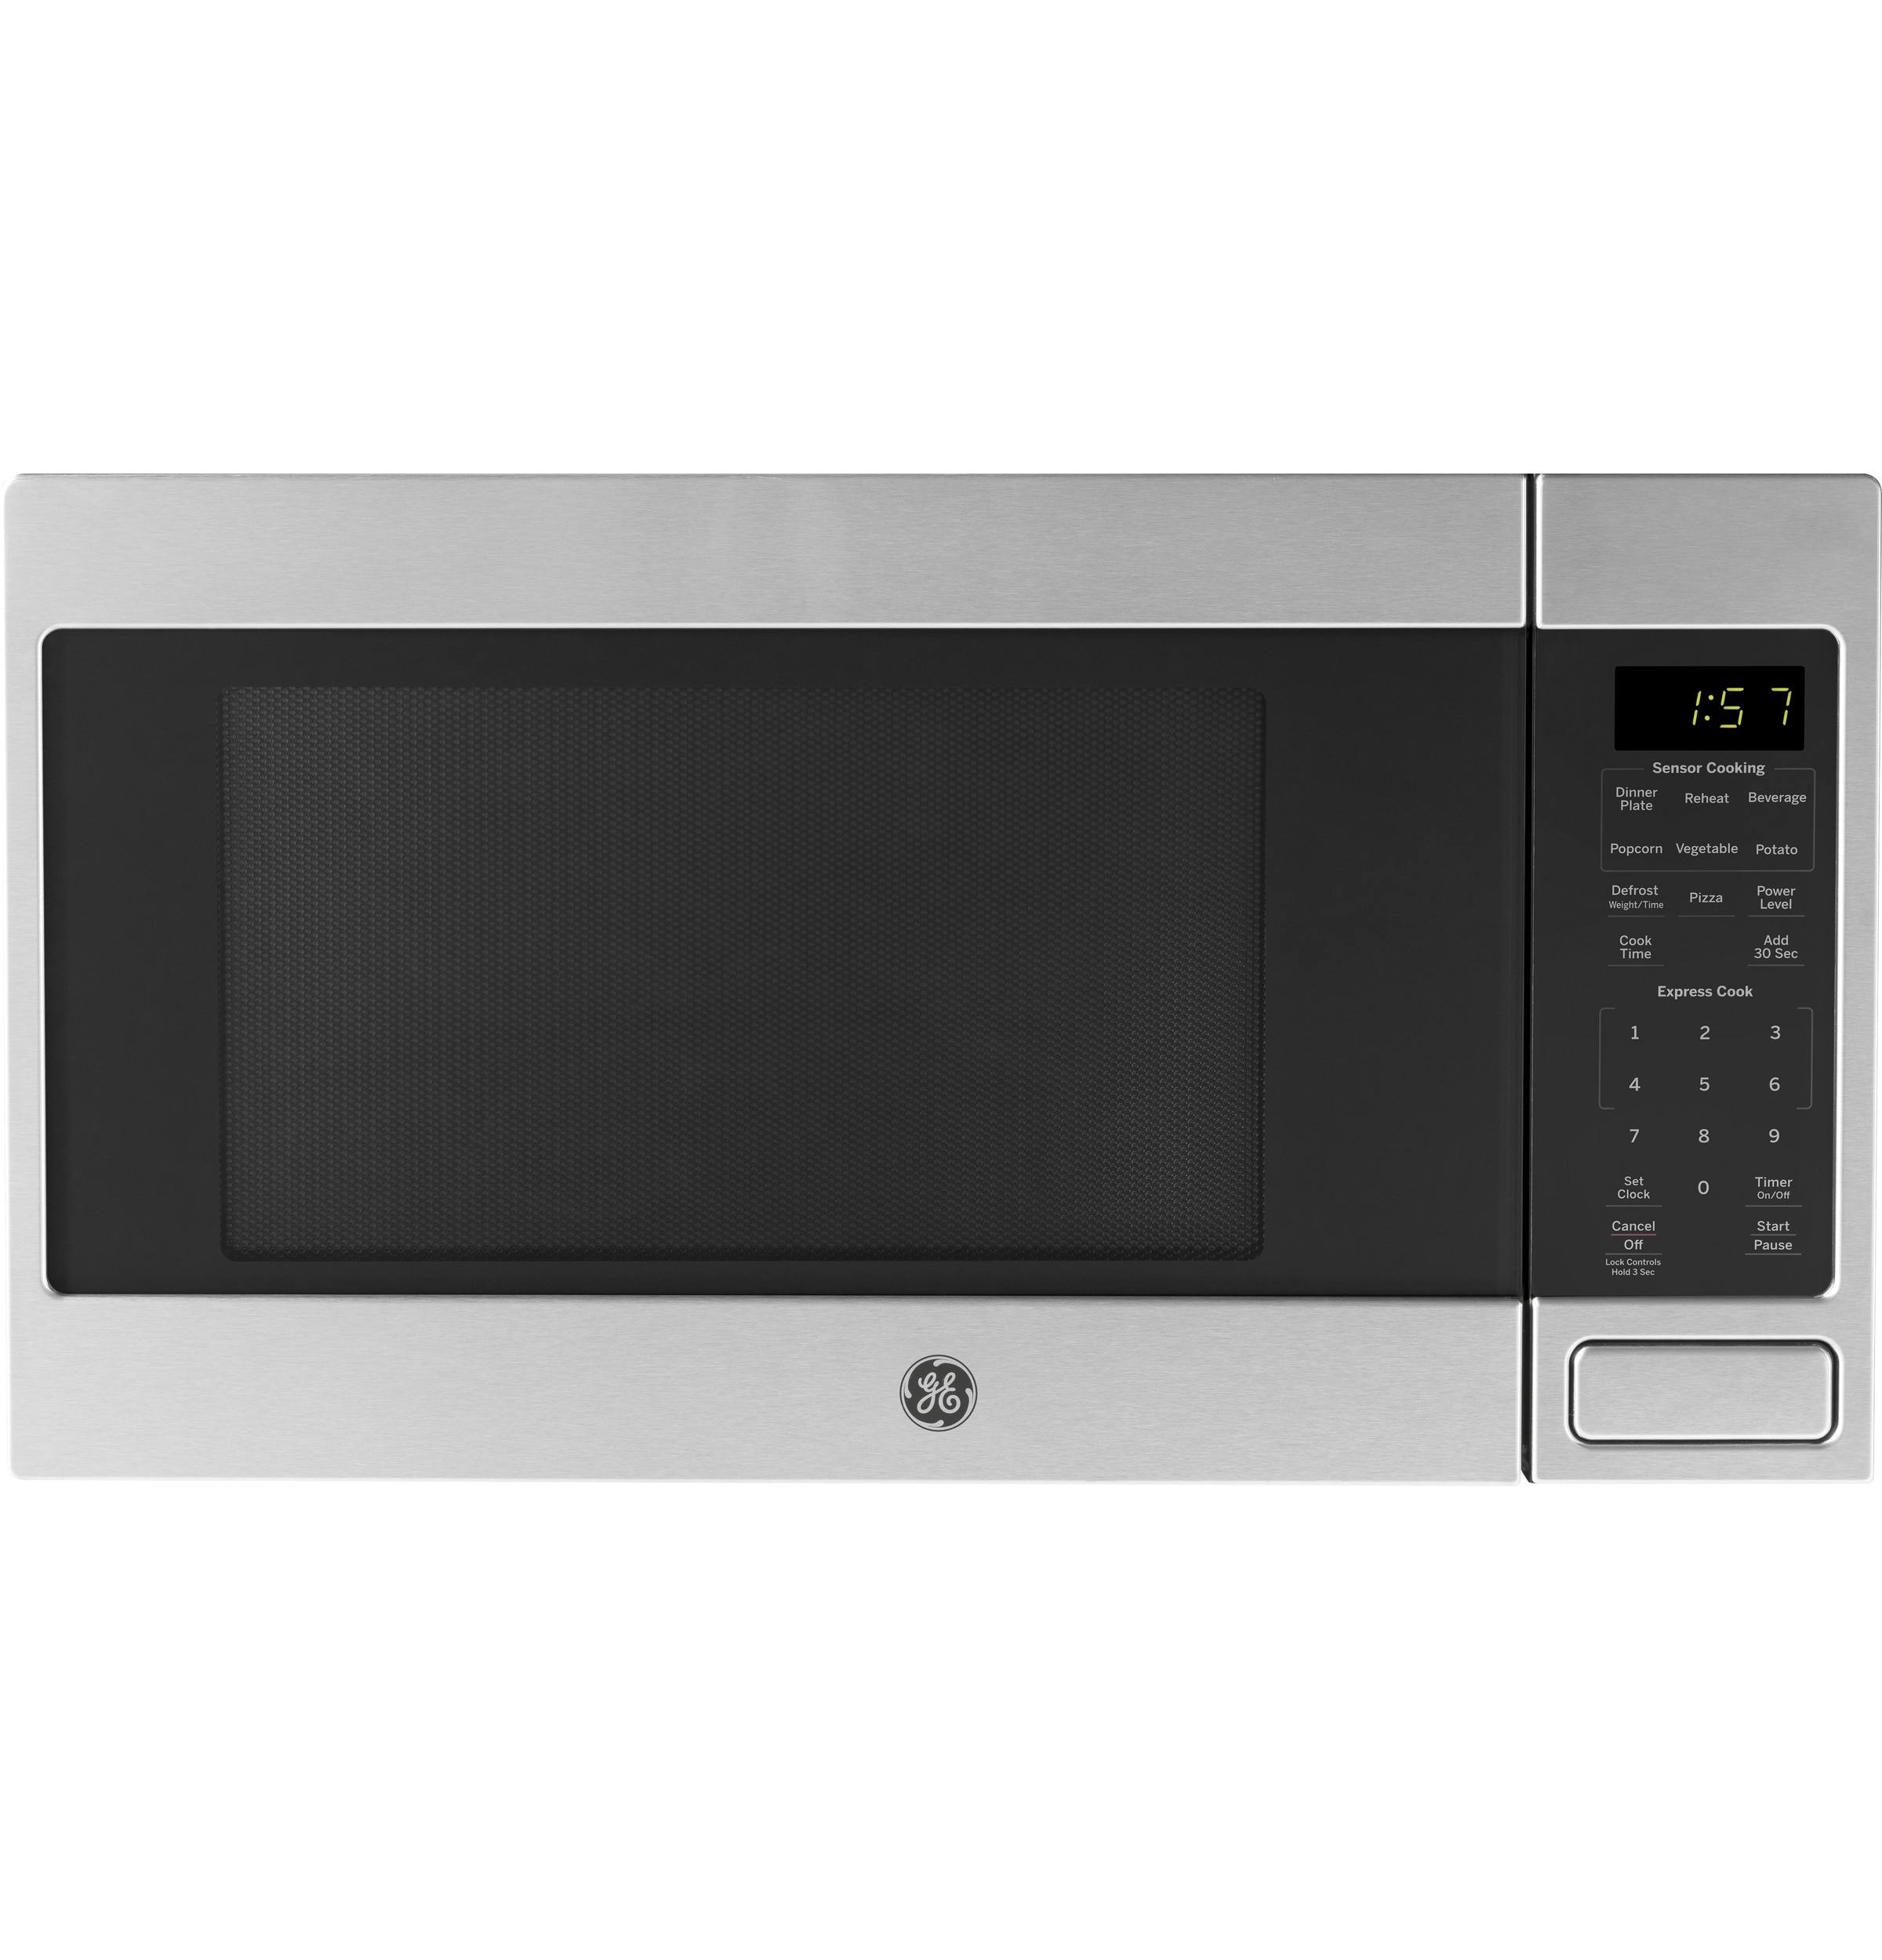 Countertop Microwaves & Microwave Ovens